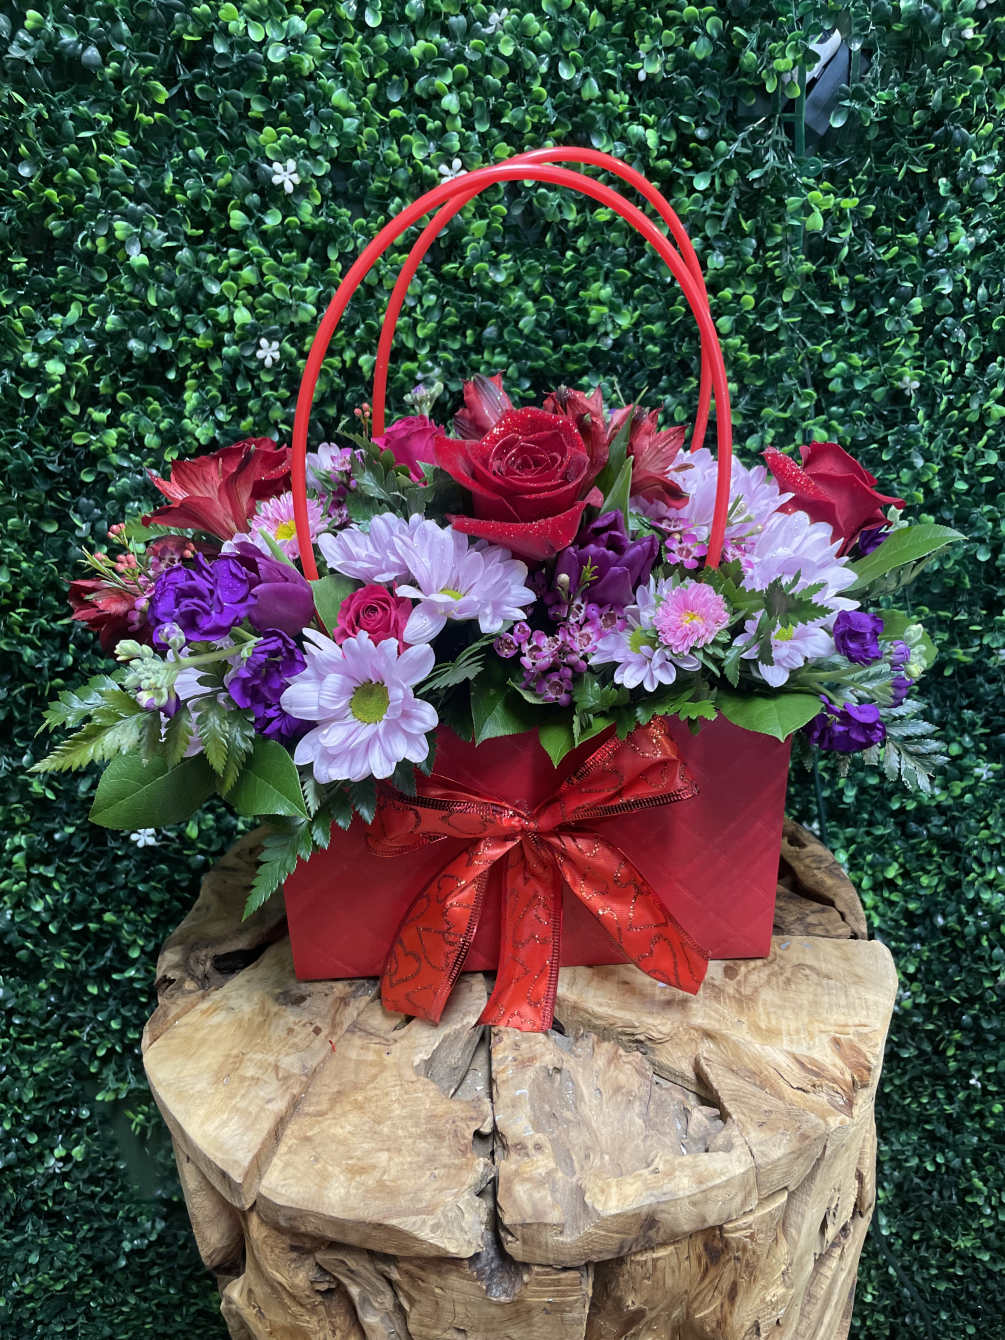 A lovely handbag arrangement filled with seasonal blooms. 